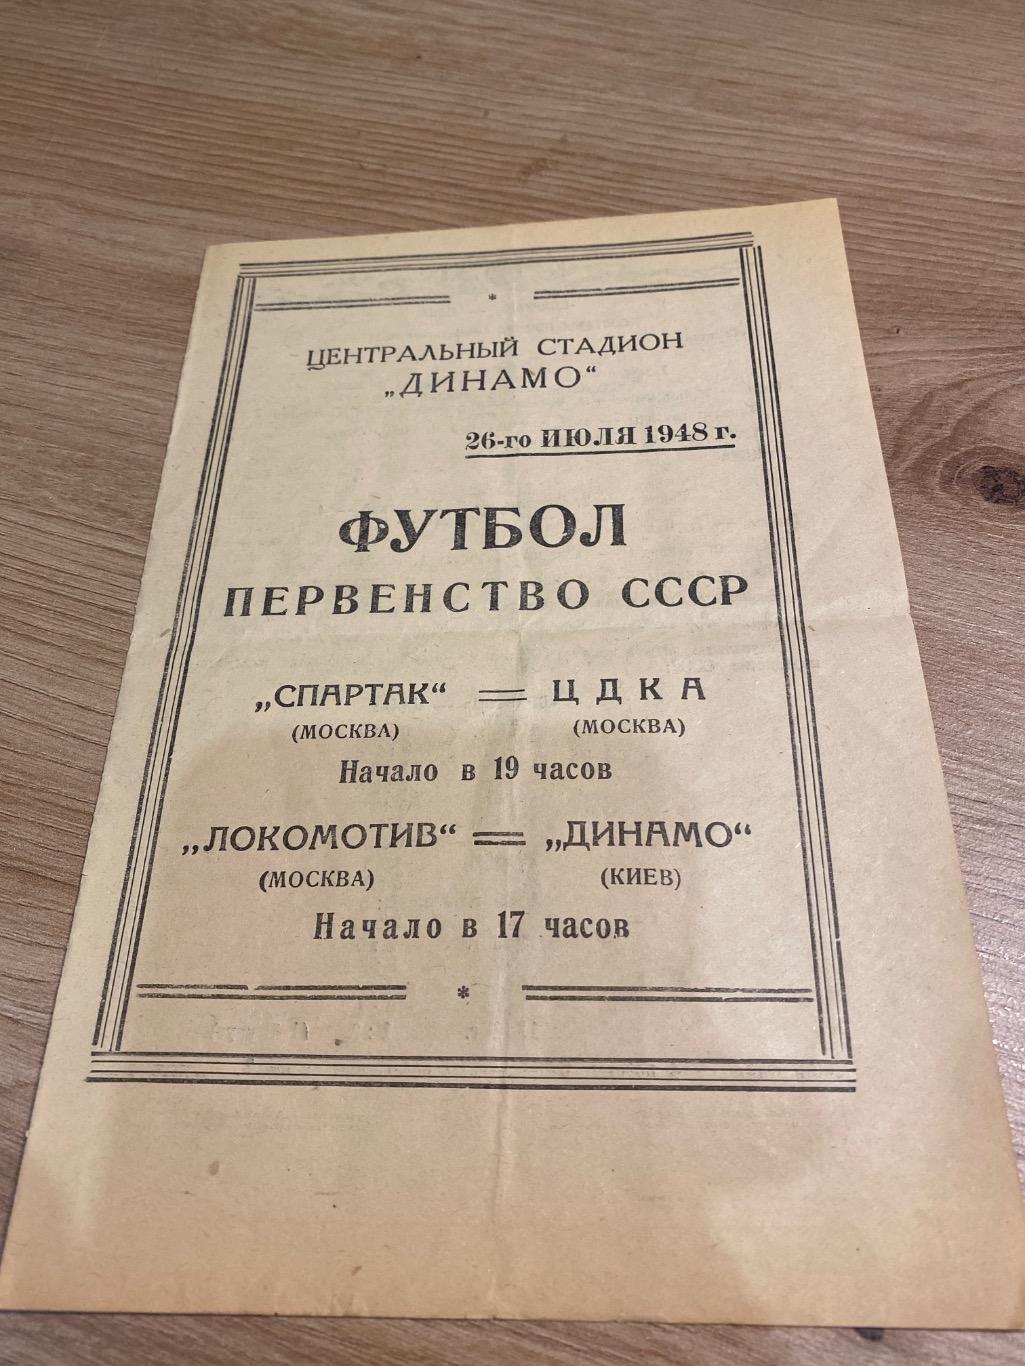 Спартак Москва - ЦДКА, Локомотив Москва - Динамо Киев 26.07.1948